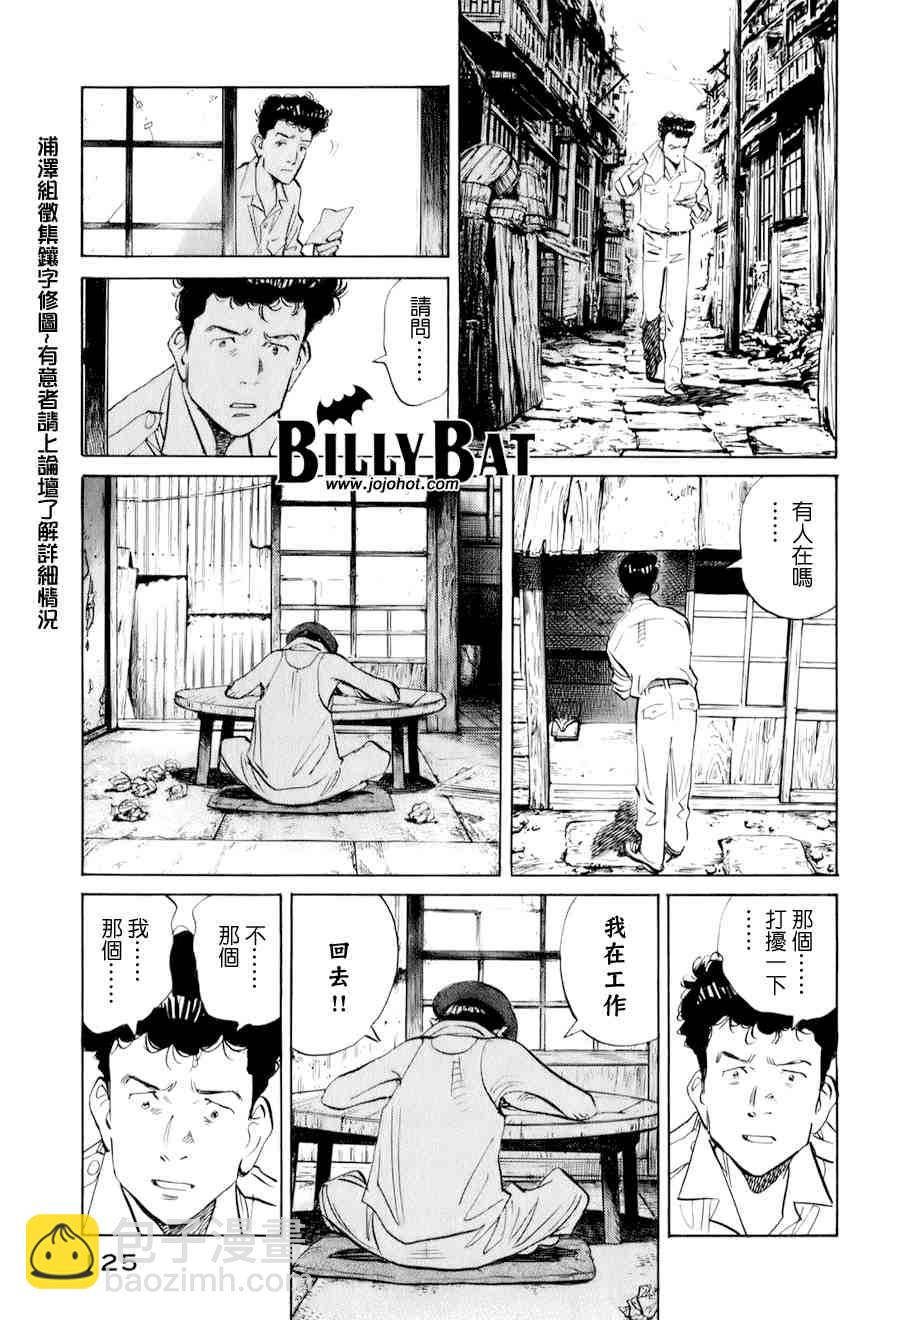 Billy_Bat - 第1卷(3/4) - 4